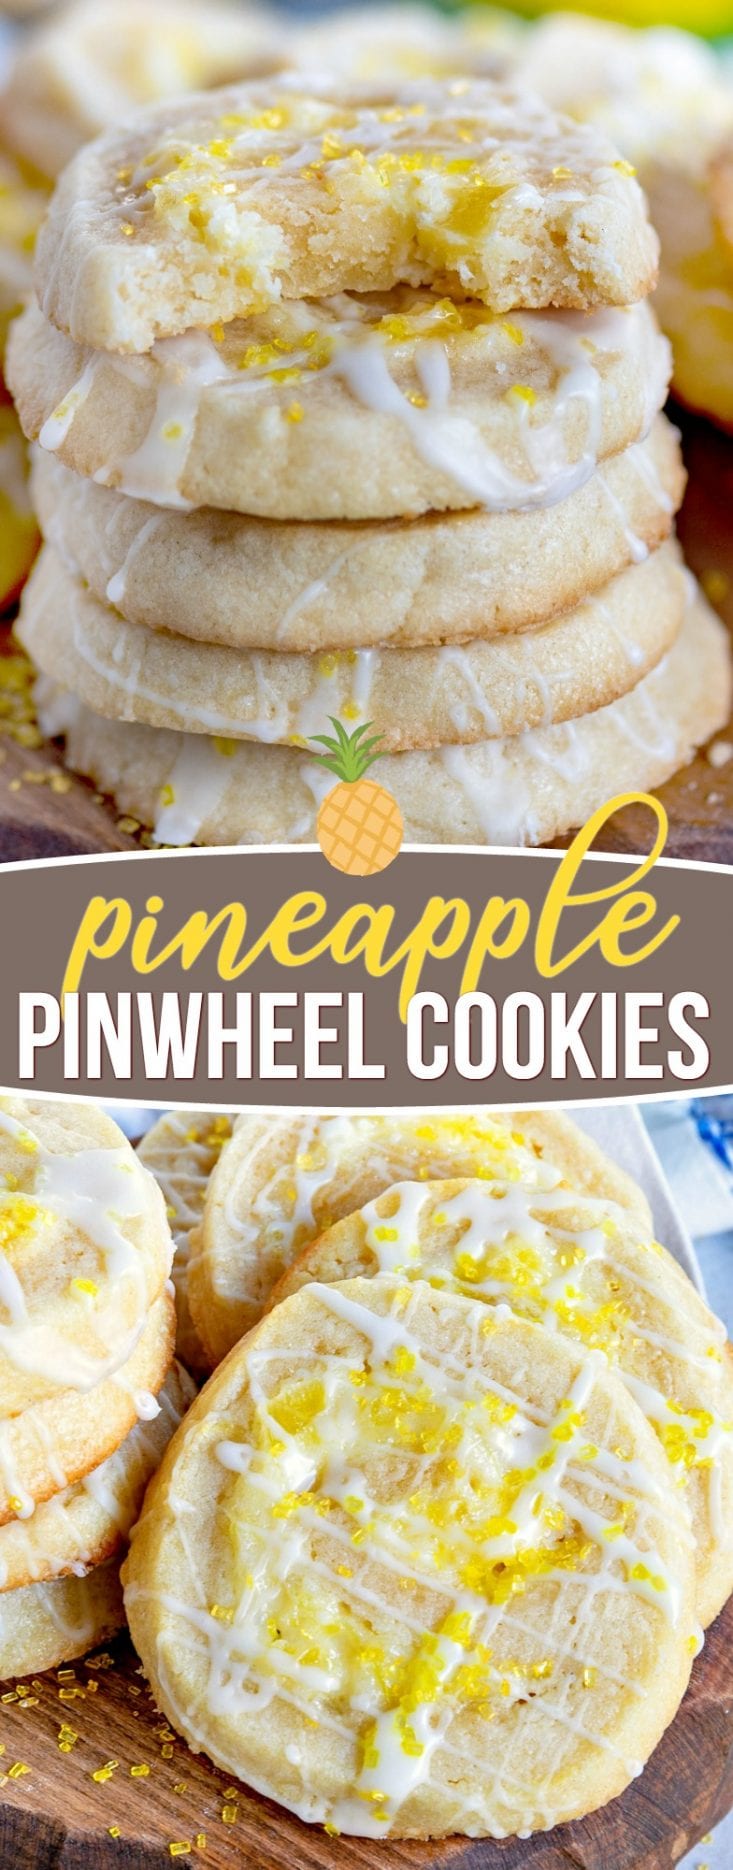 pineapple-pinwheel-cookies-collage